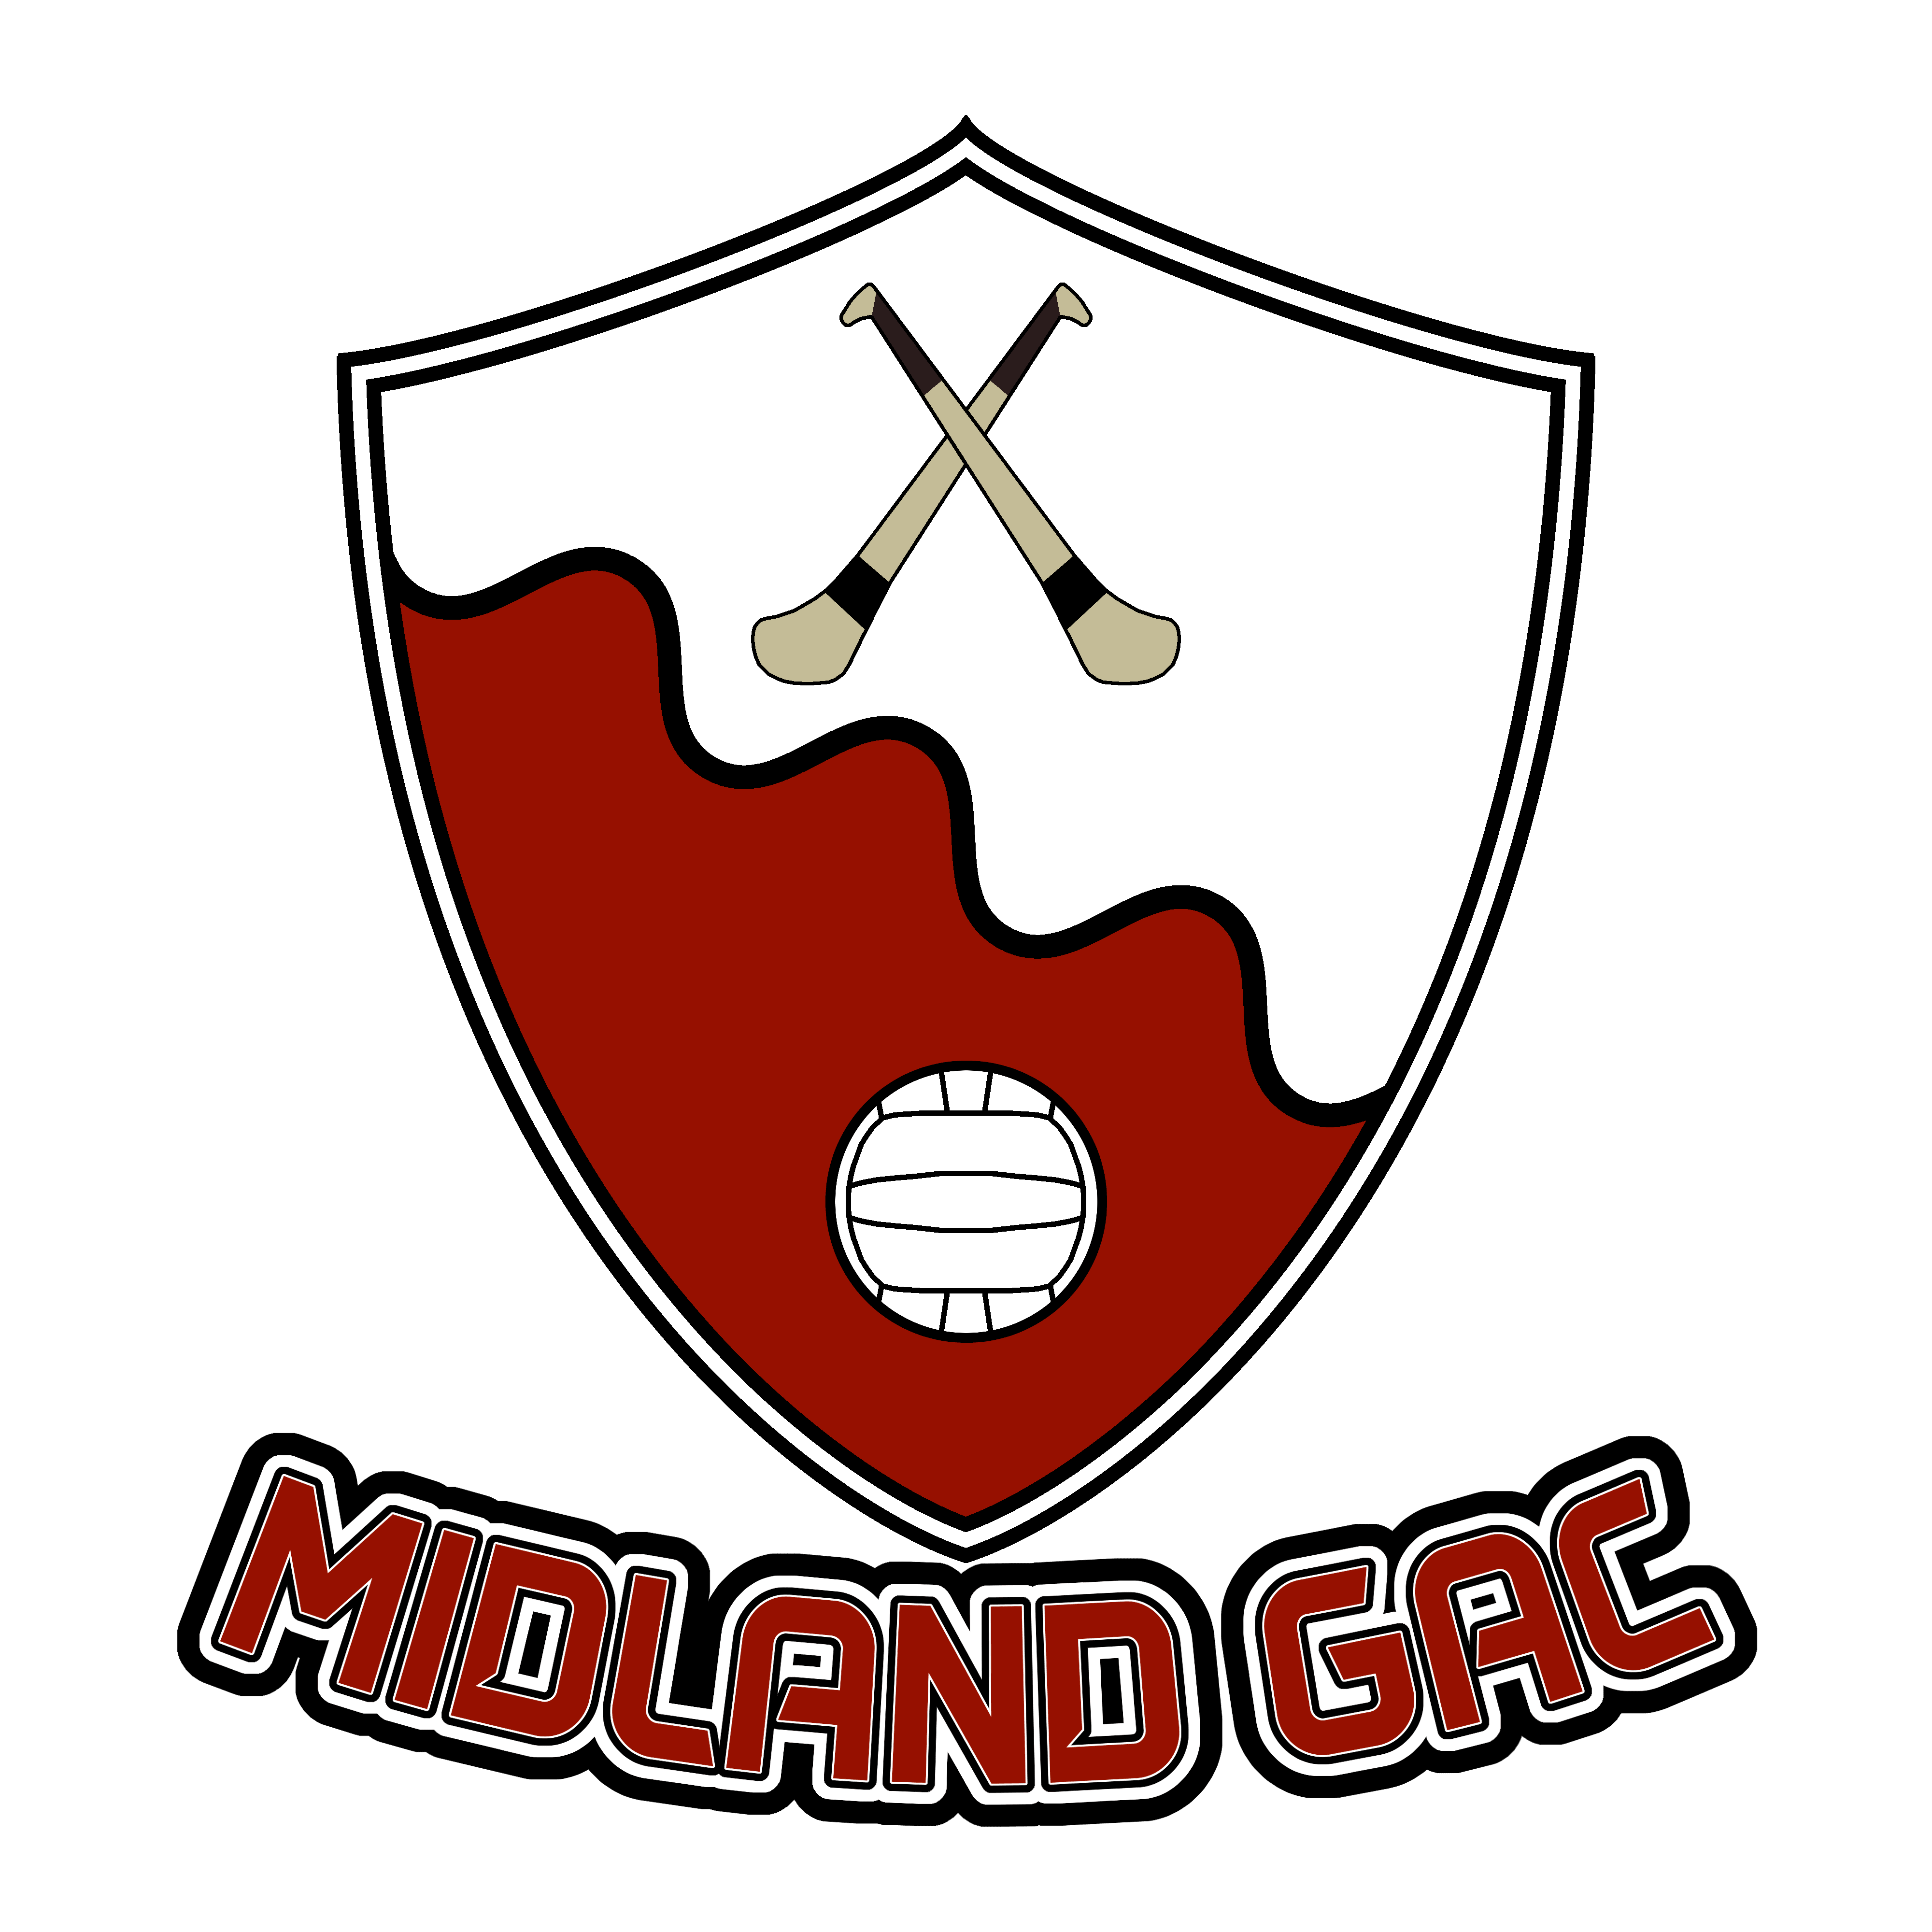 Midland GAC